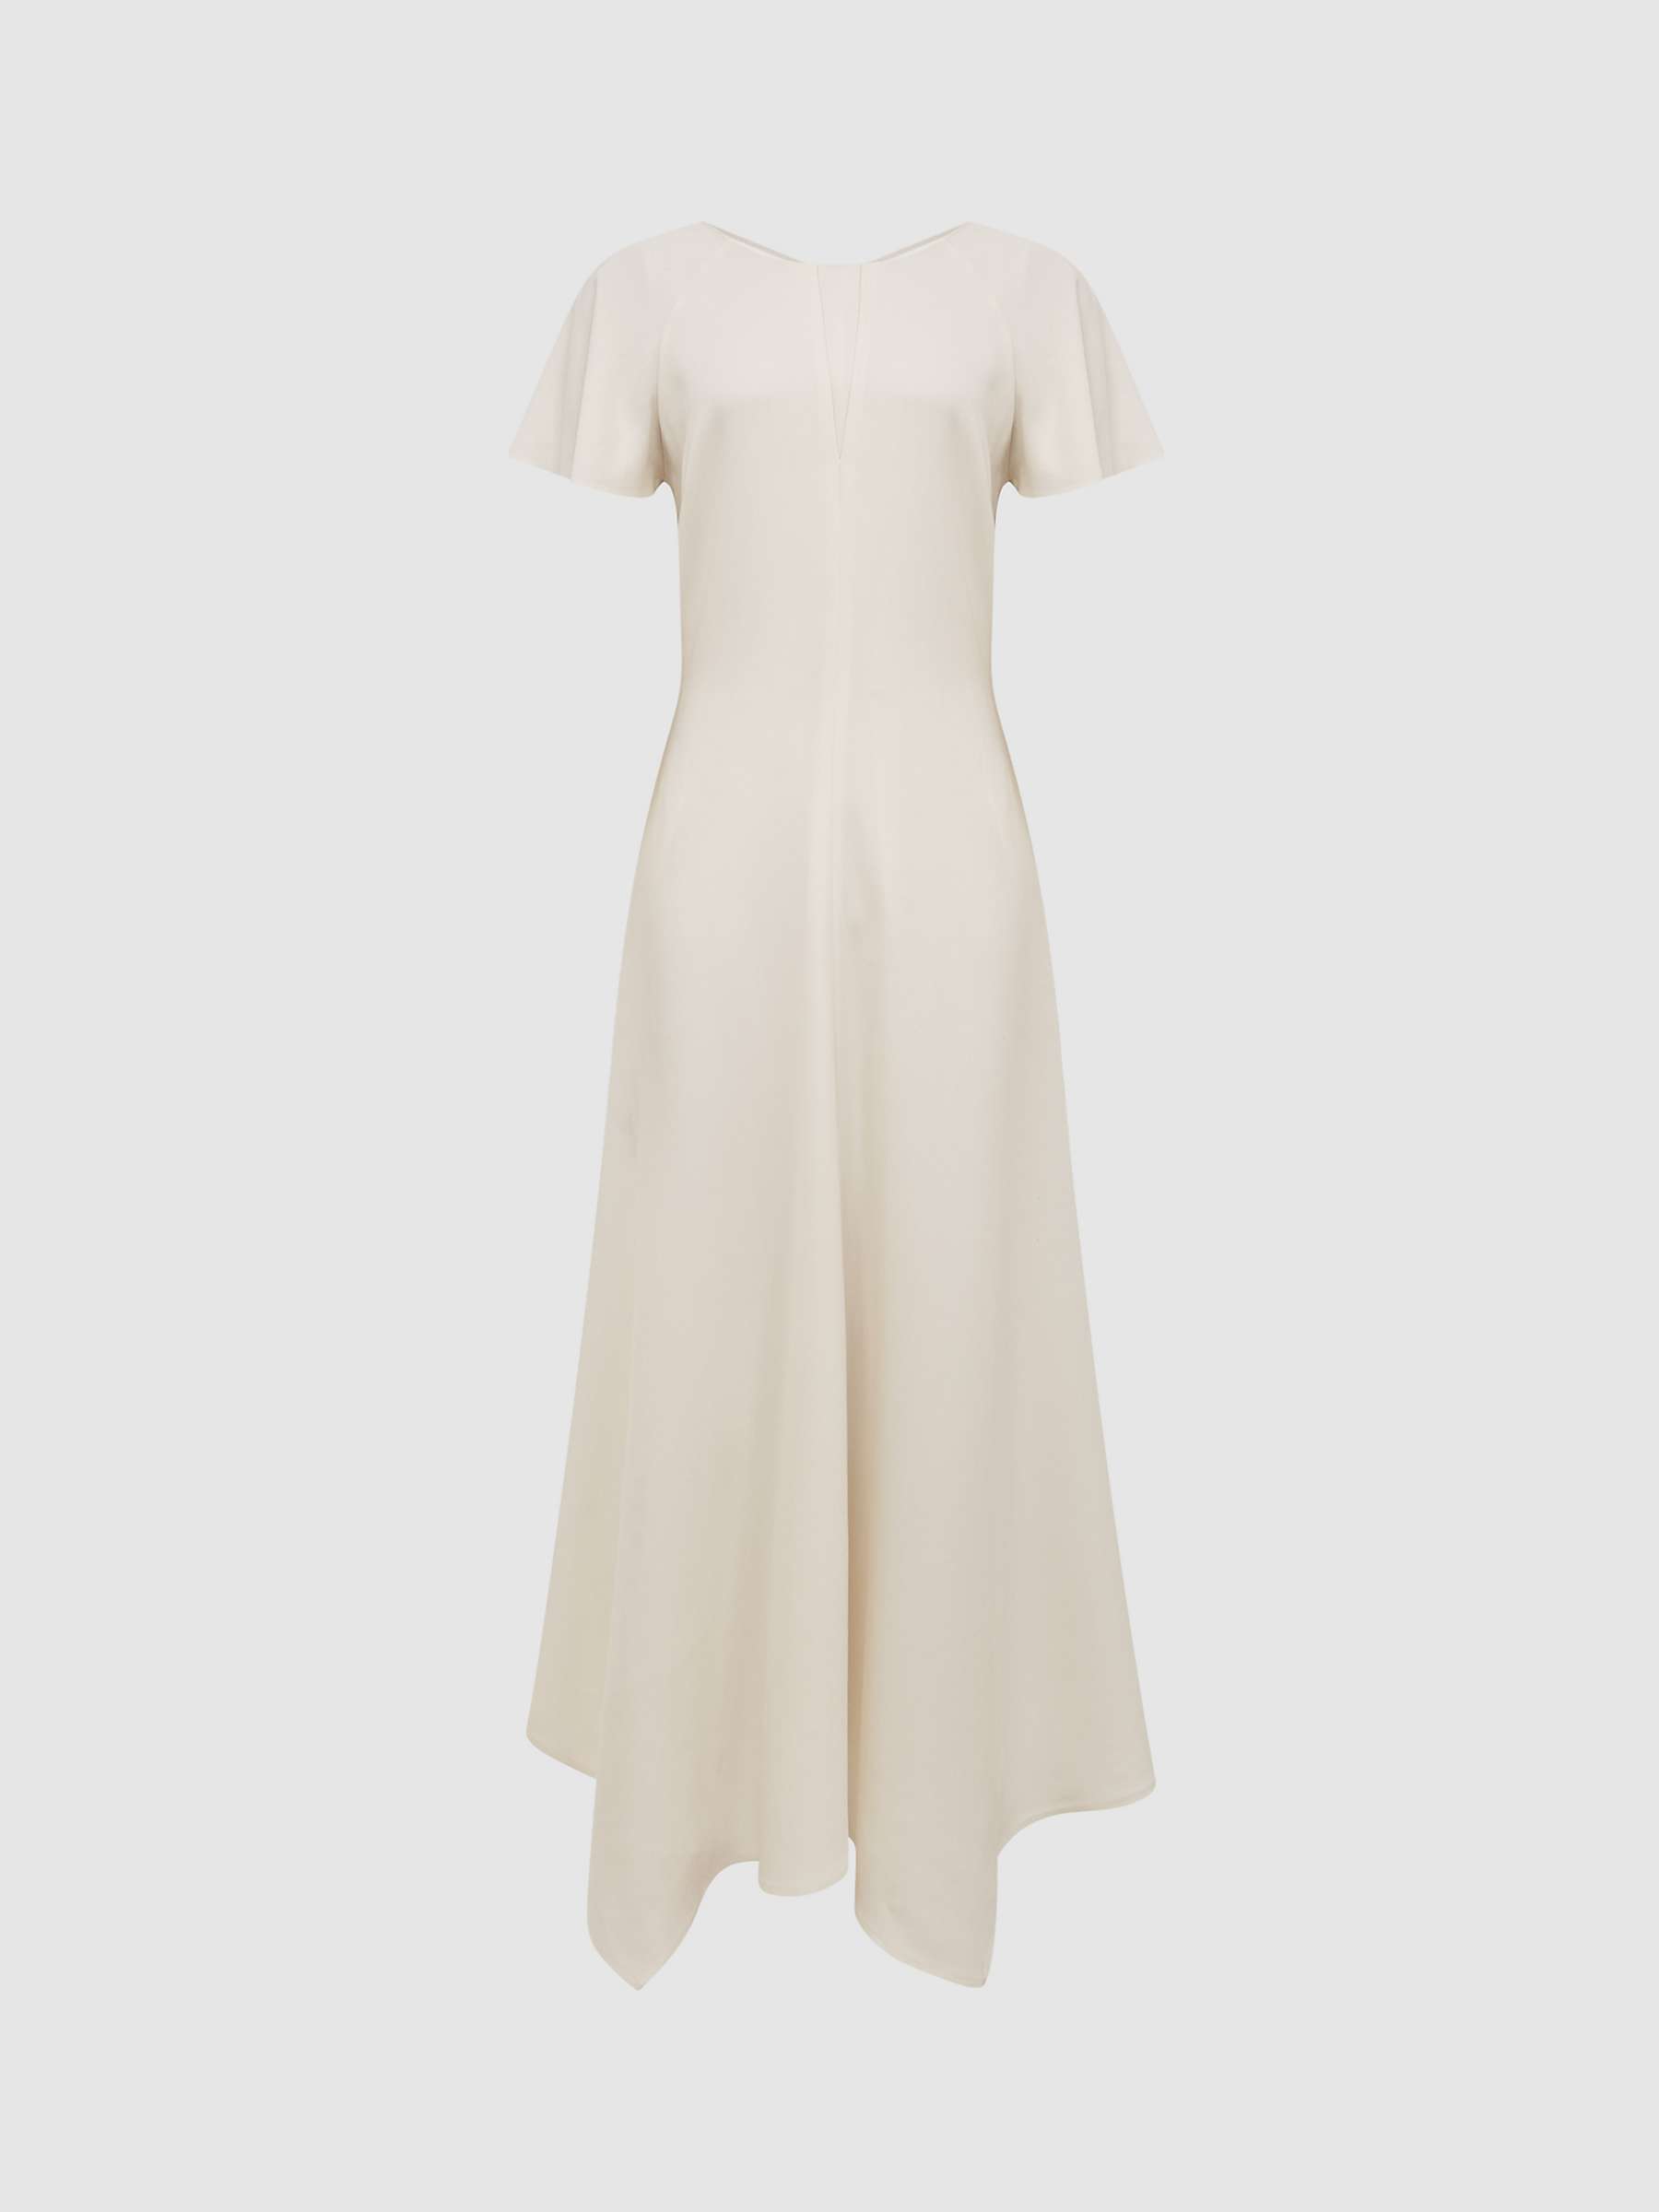 Reiss Eleni Cap Sleeve Dress, White at John Lewis & Partners